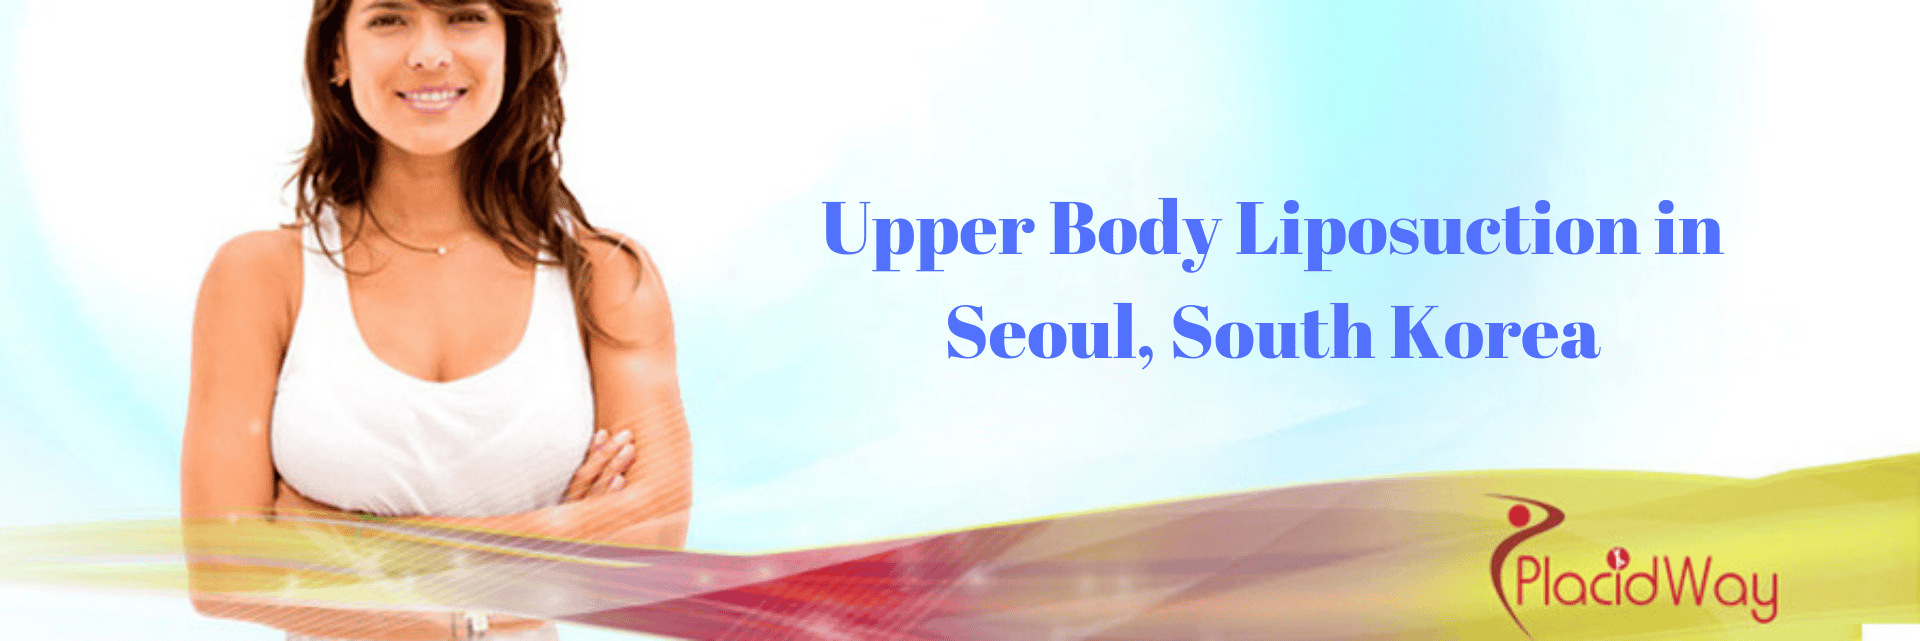 Upper Body Liposuction in Seoul, South Korea